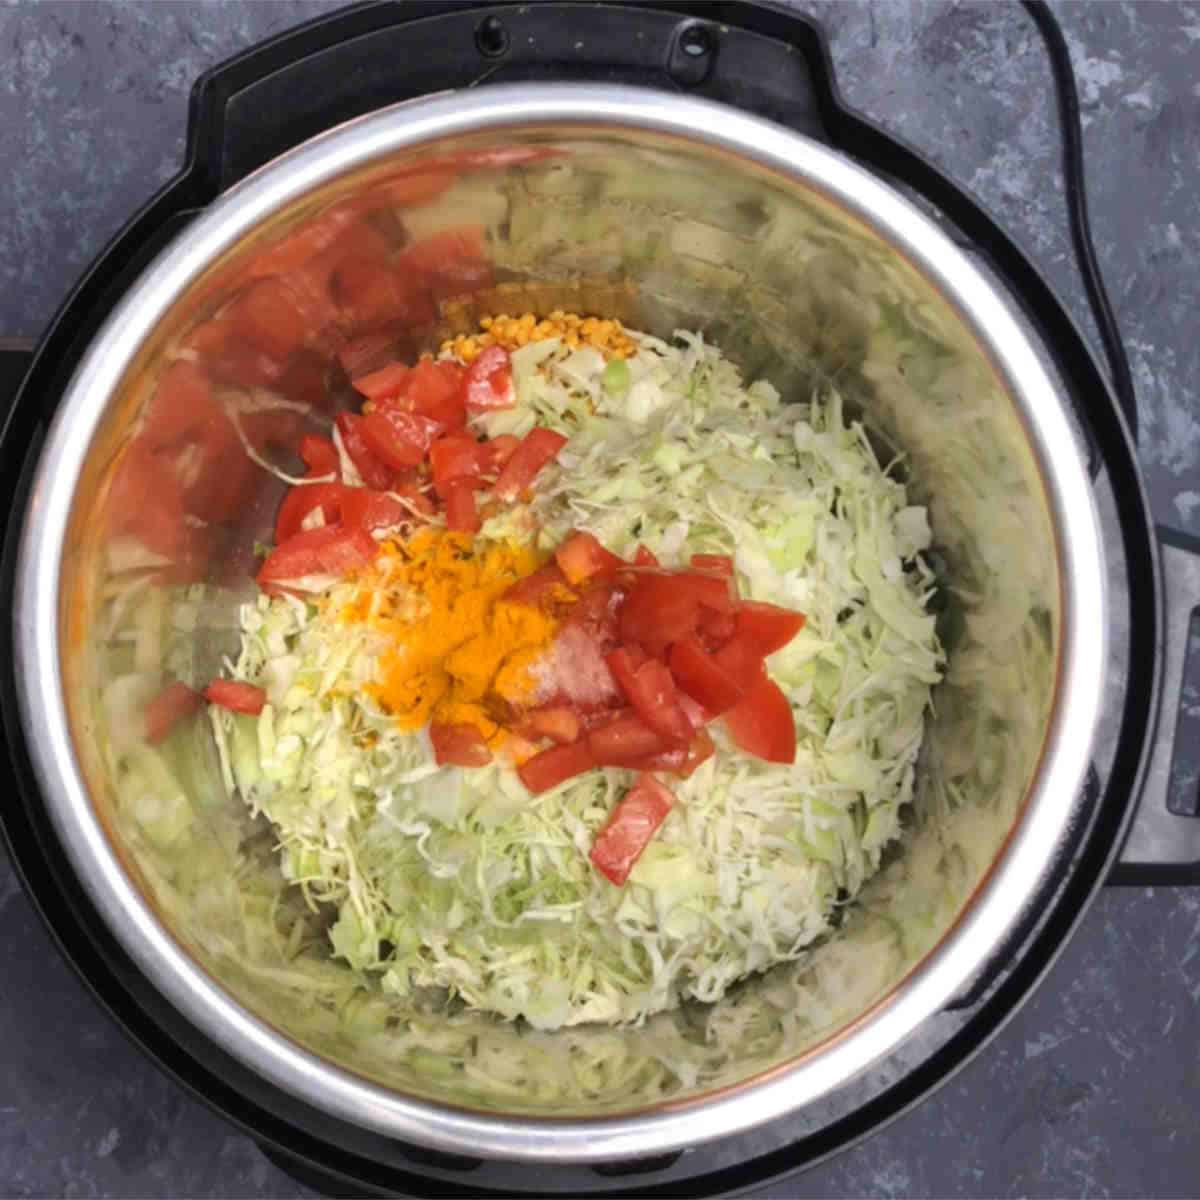 Add dal, cabbage, tomato, turmeric, and salt.